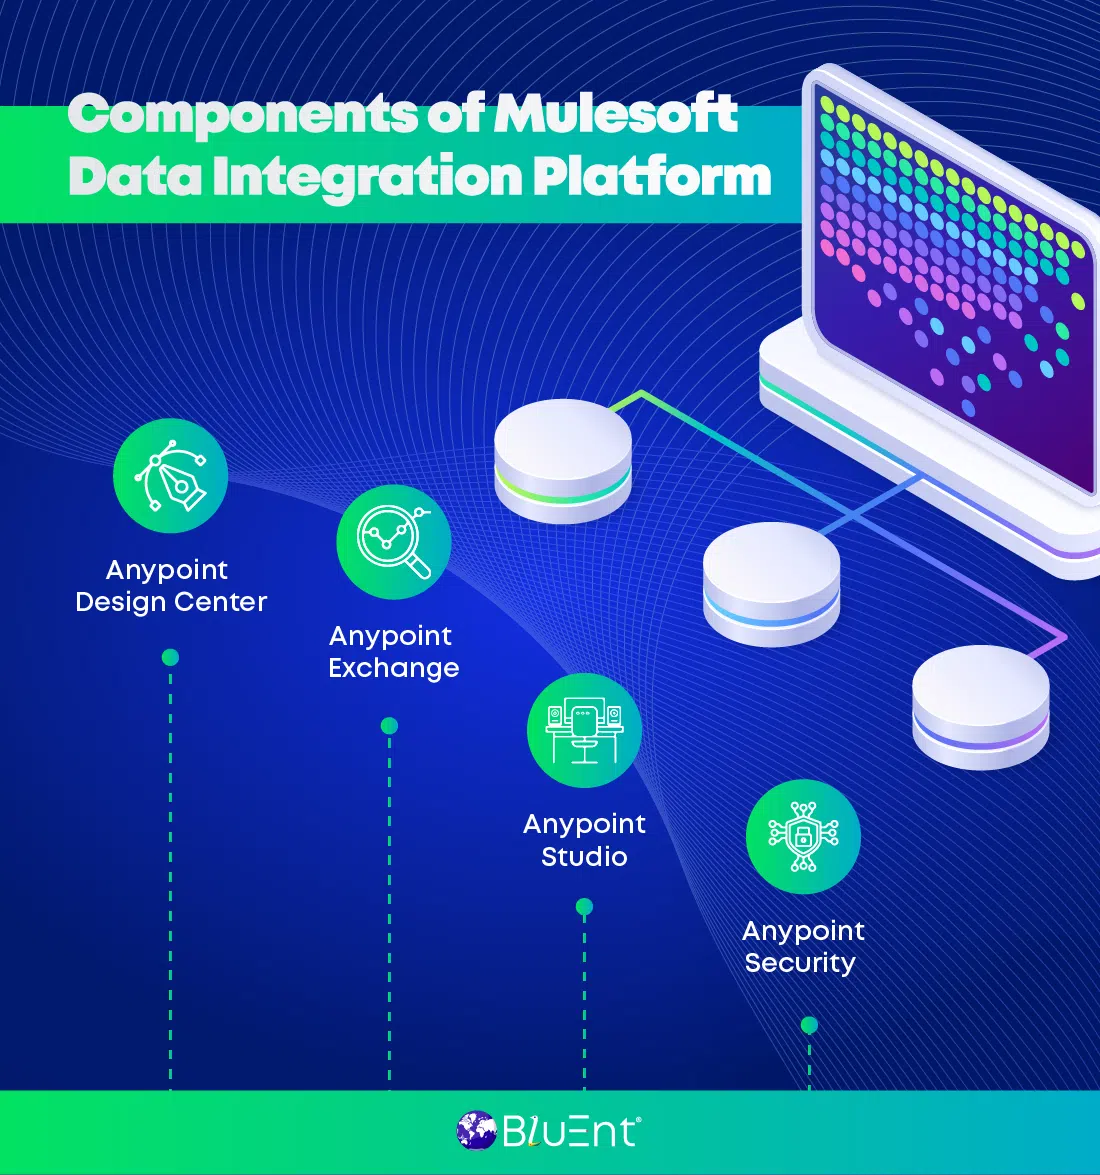 IComponents of Mulesoft data integration platform